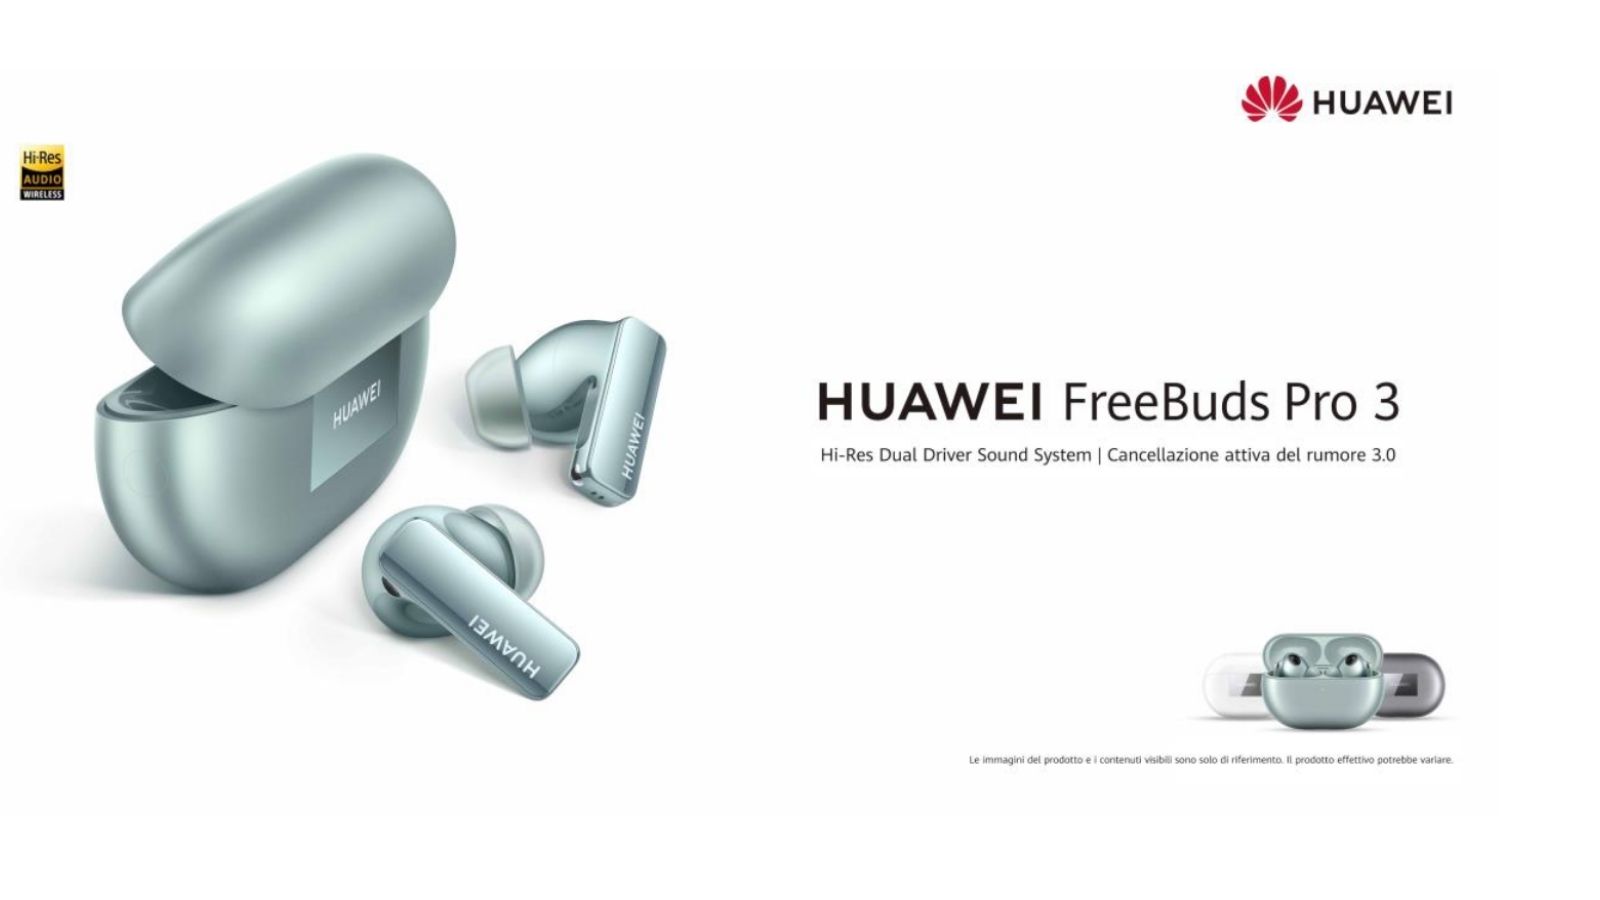 Huawei FreeBuds Pro 3, ufficiali in Italia le nuove cuffie true wireless